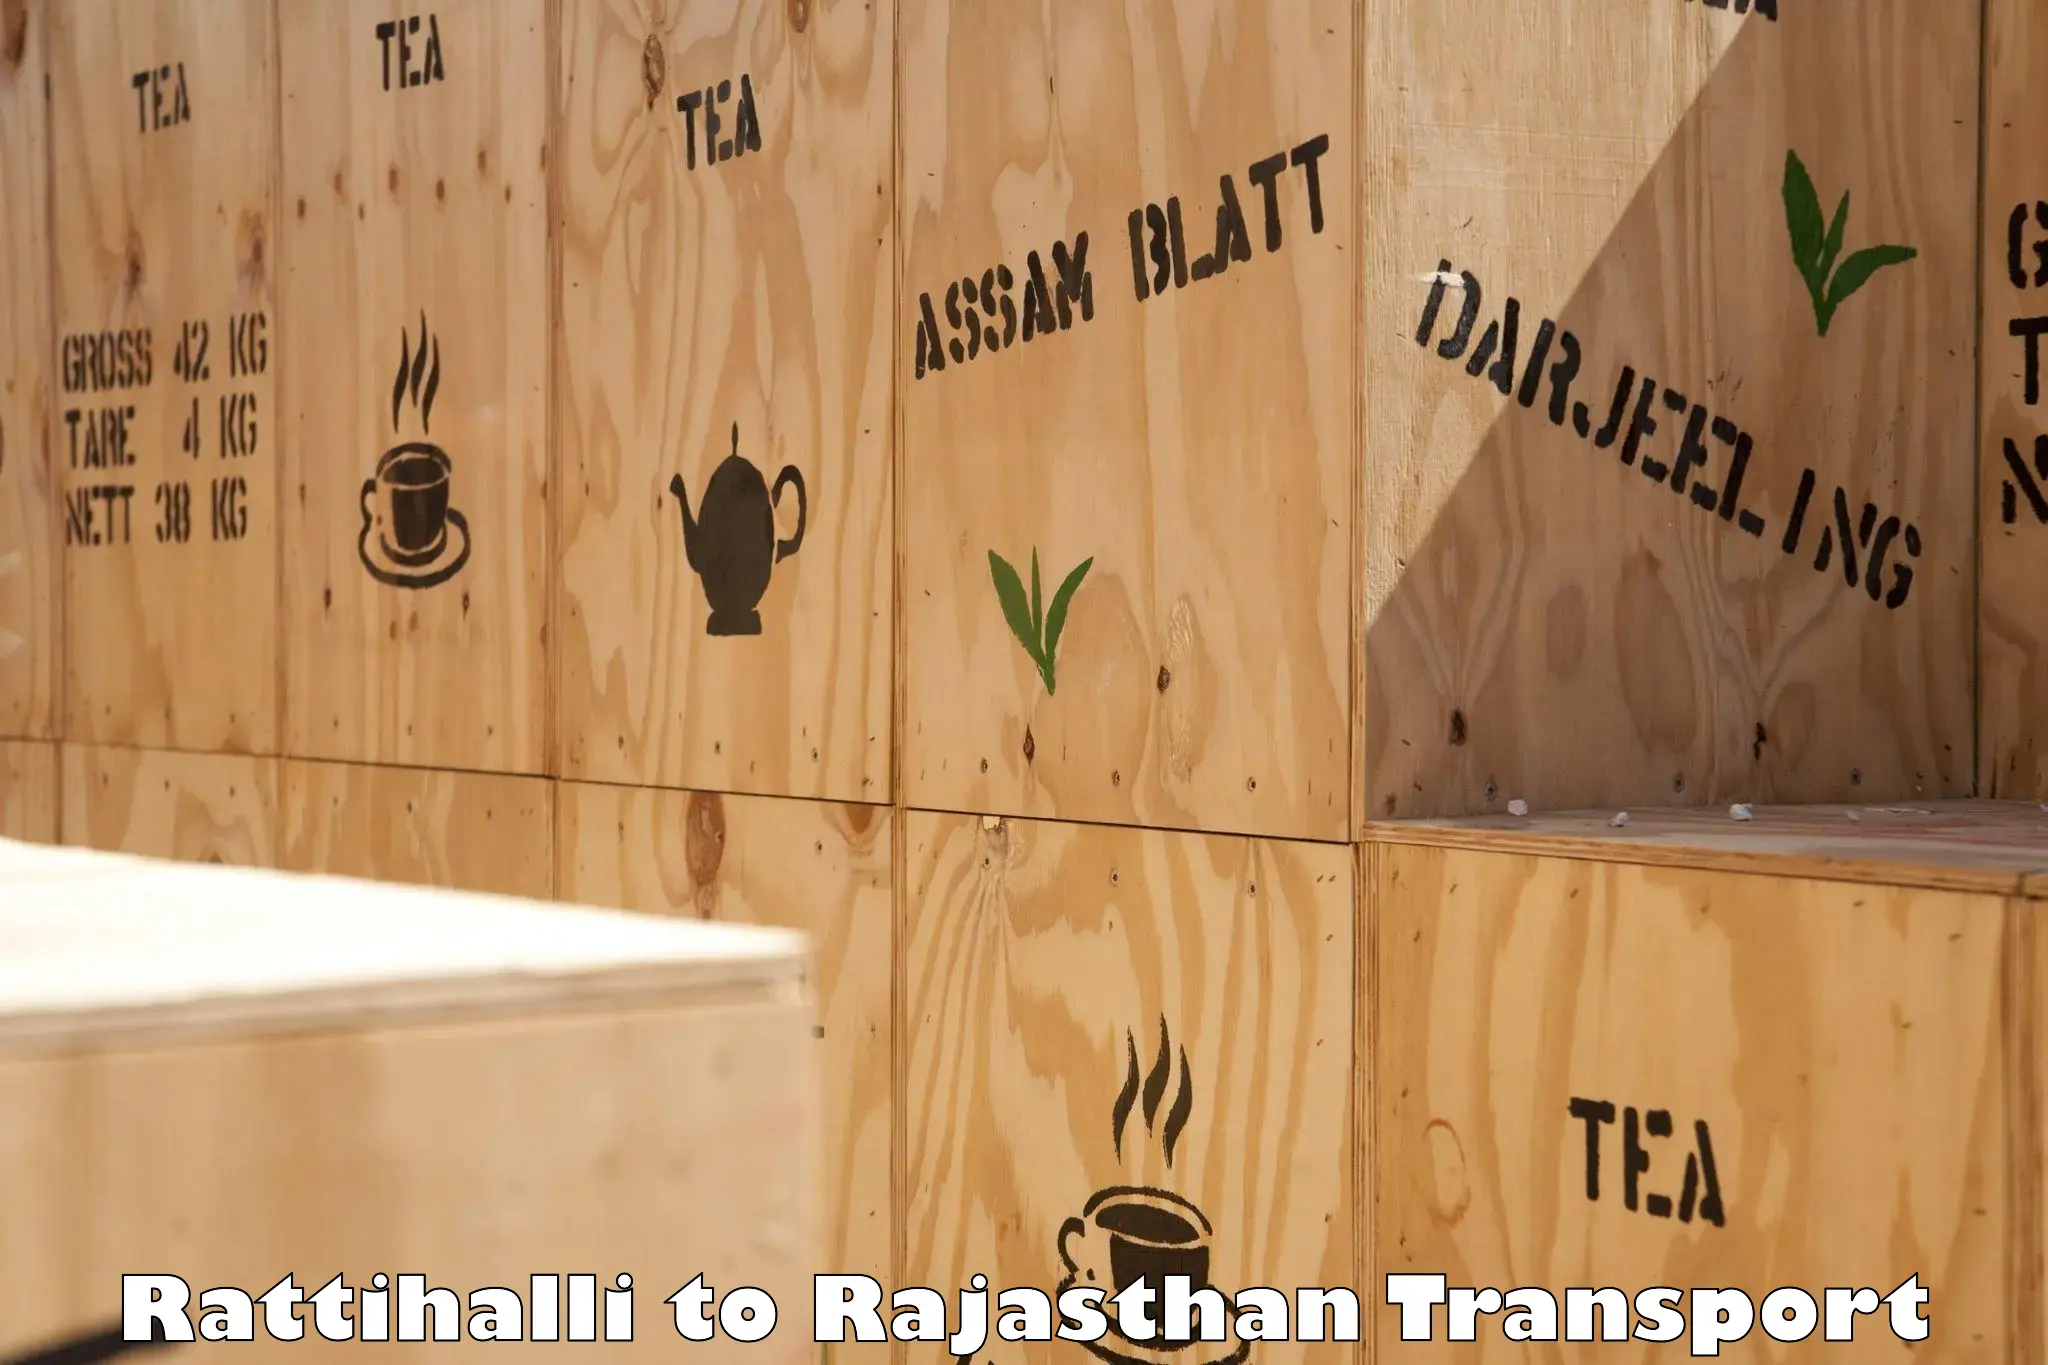 Container transport service Rattihalli to Tibbi